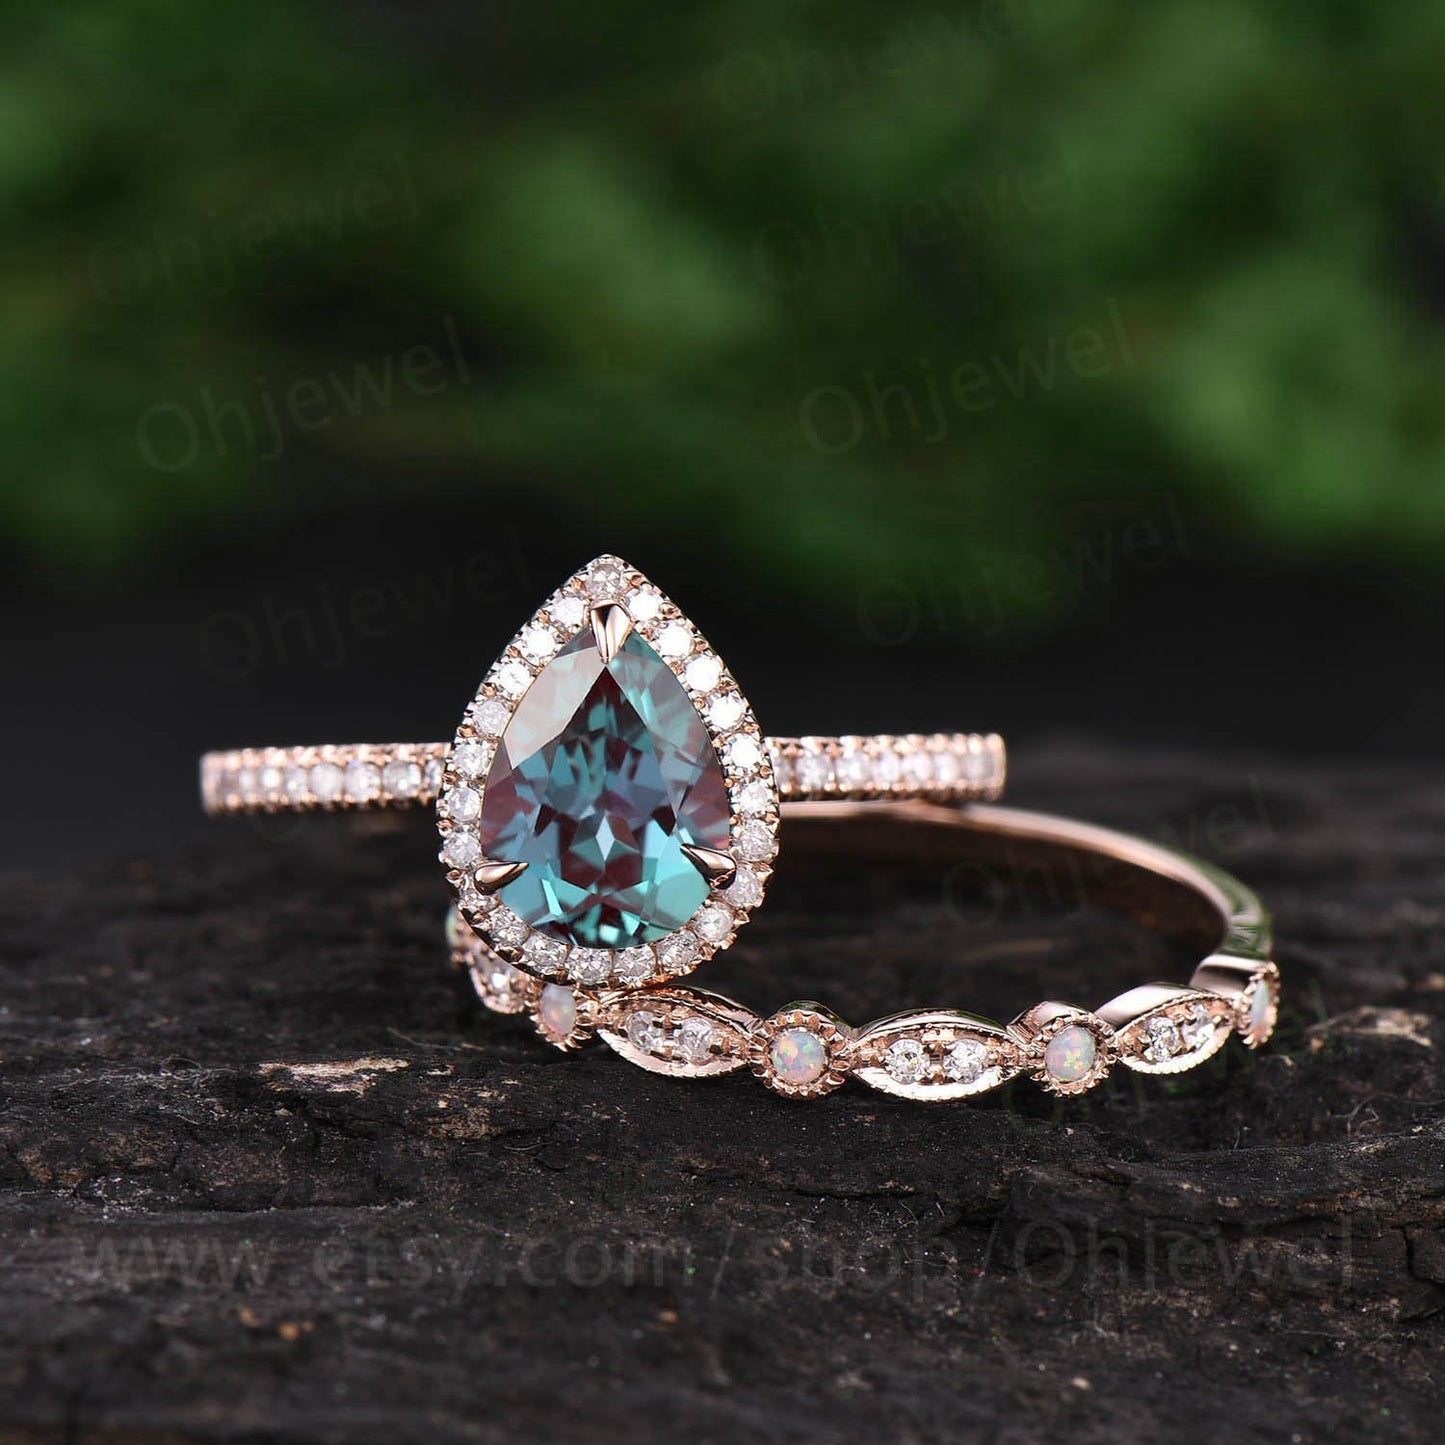 Vintage Alexandrite engagement ring 2pcs color change Alexandrite ring rose gold ring unique opal ring opal wedding band bridal set gift